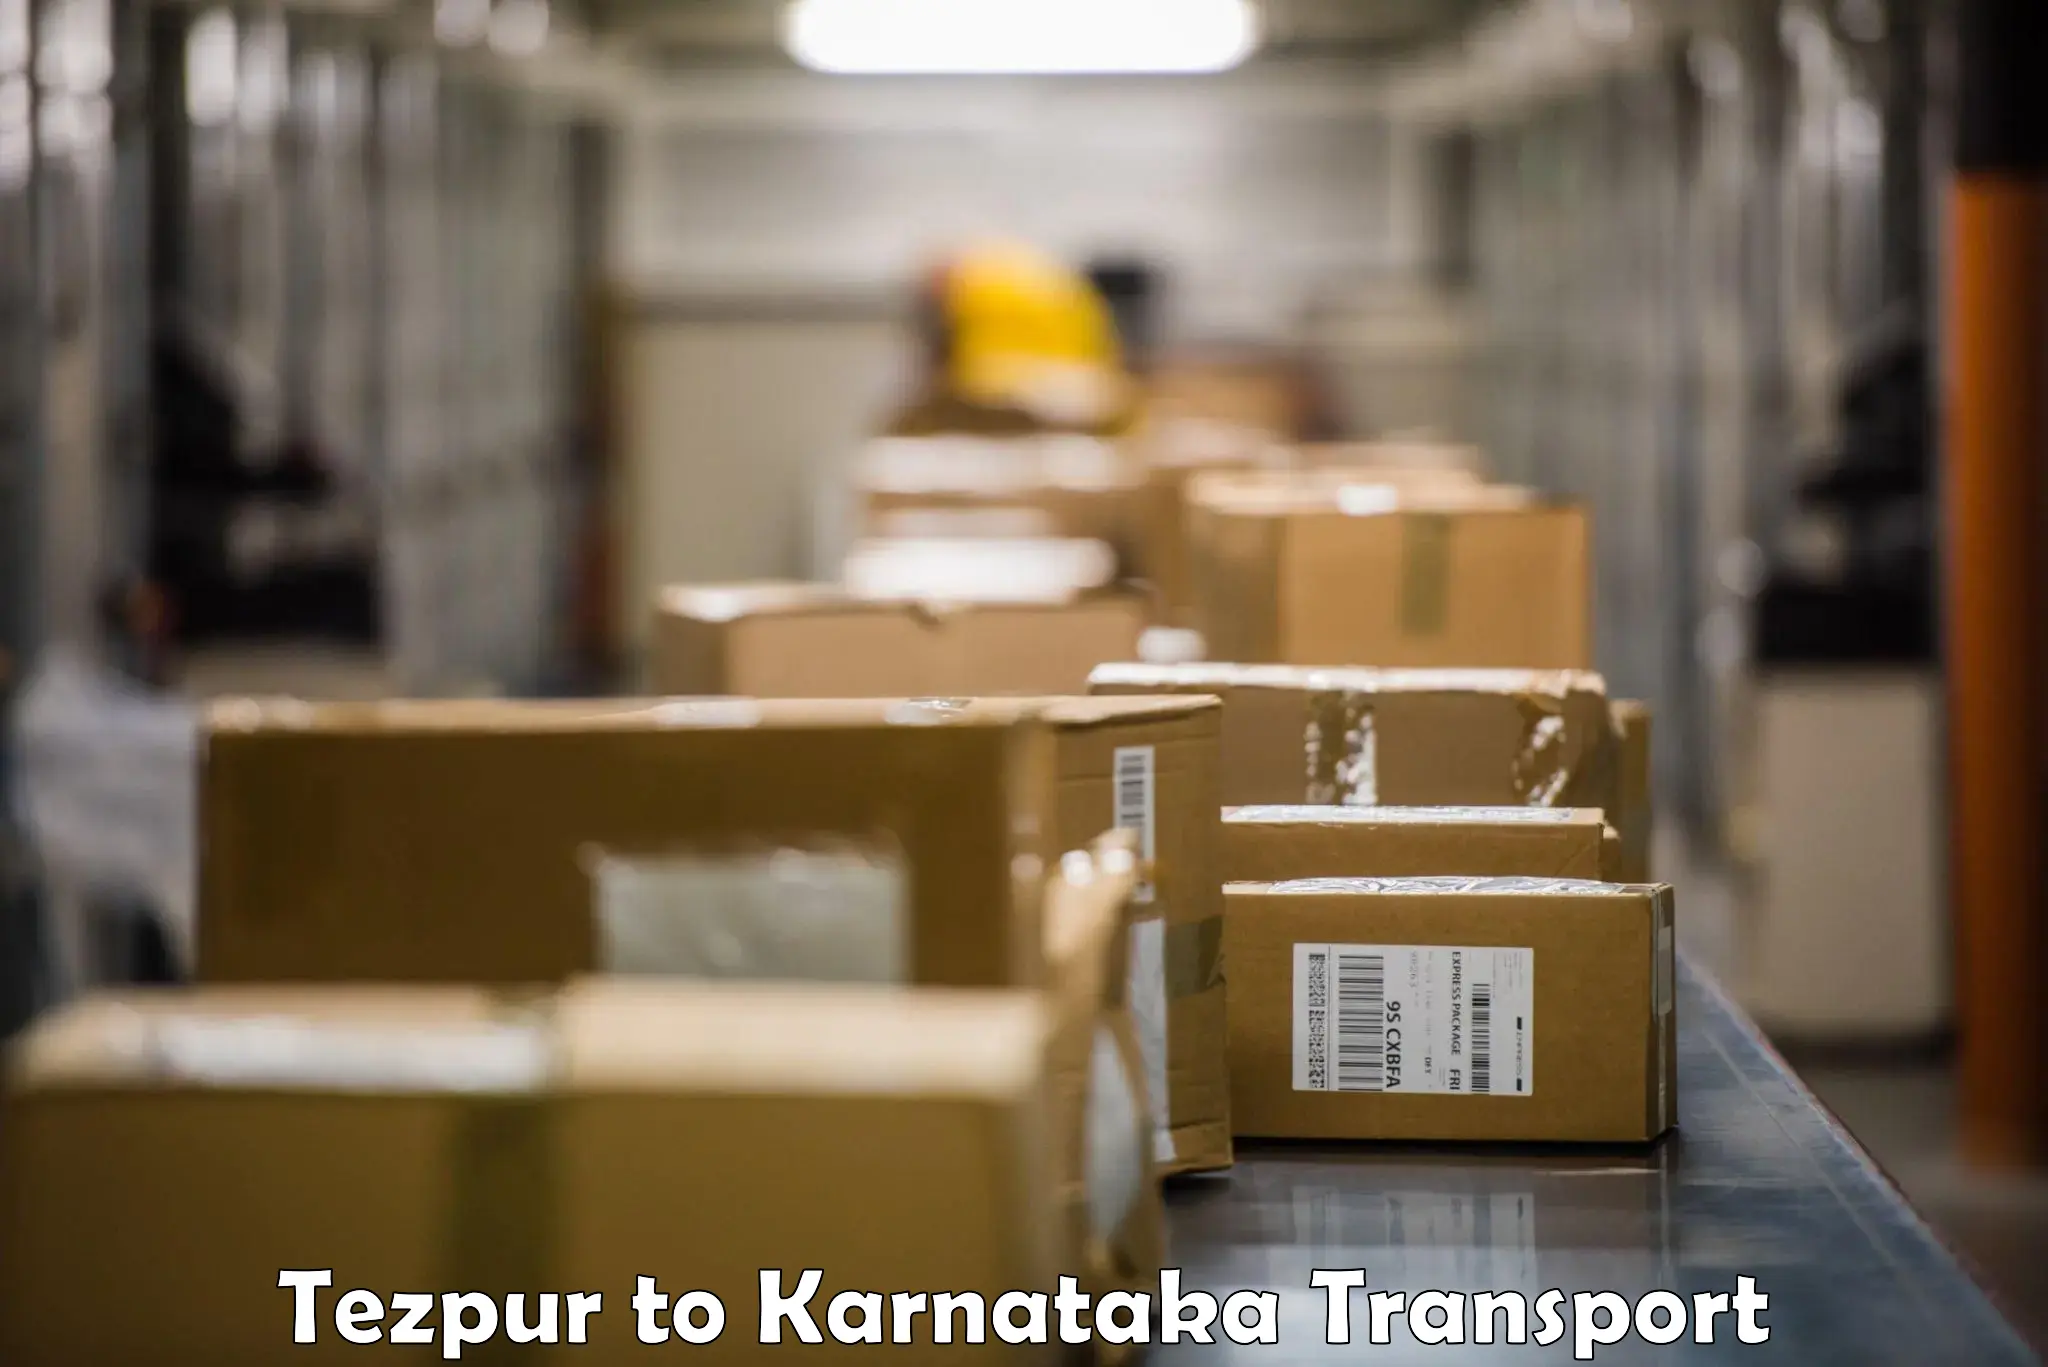 Furniture transport service Tezpur to Yenepoya Mangalore